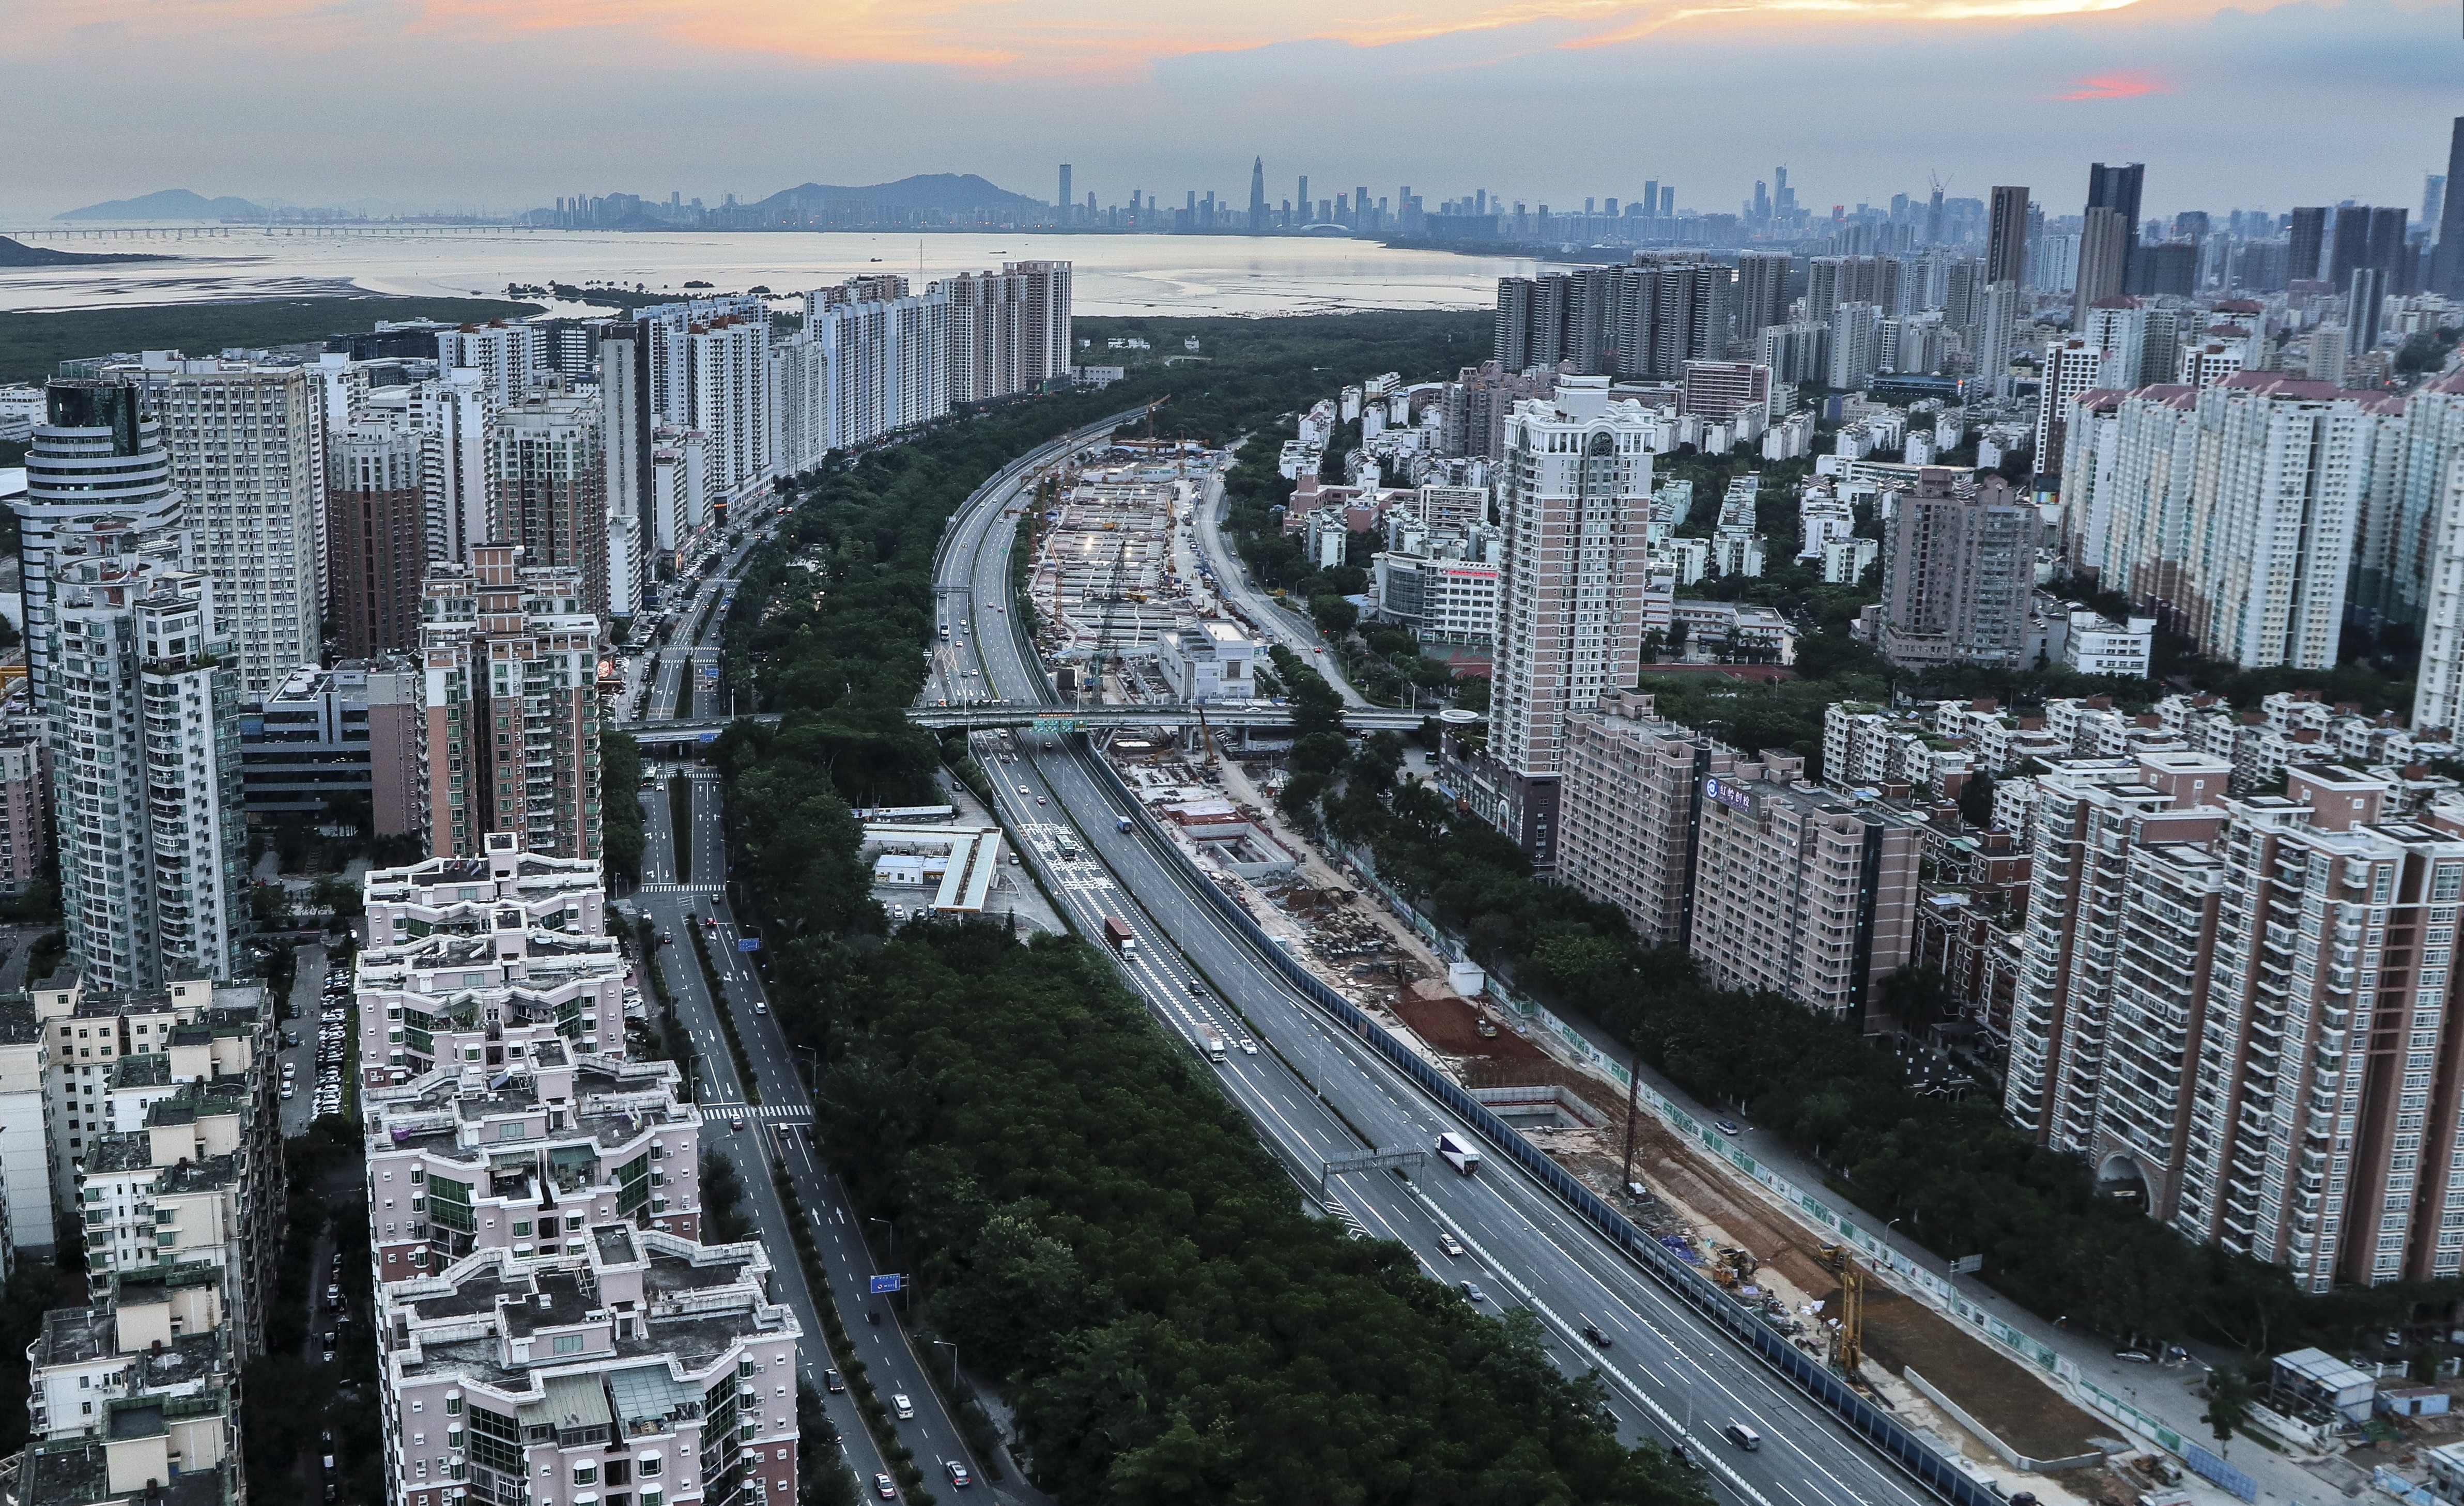 The Beijing-Hong Kong-Macau expressway site taken from the Futian District in Shenzhen. 22JUL17 SCMP / Roy Issa